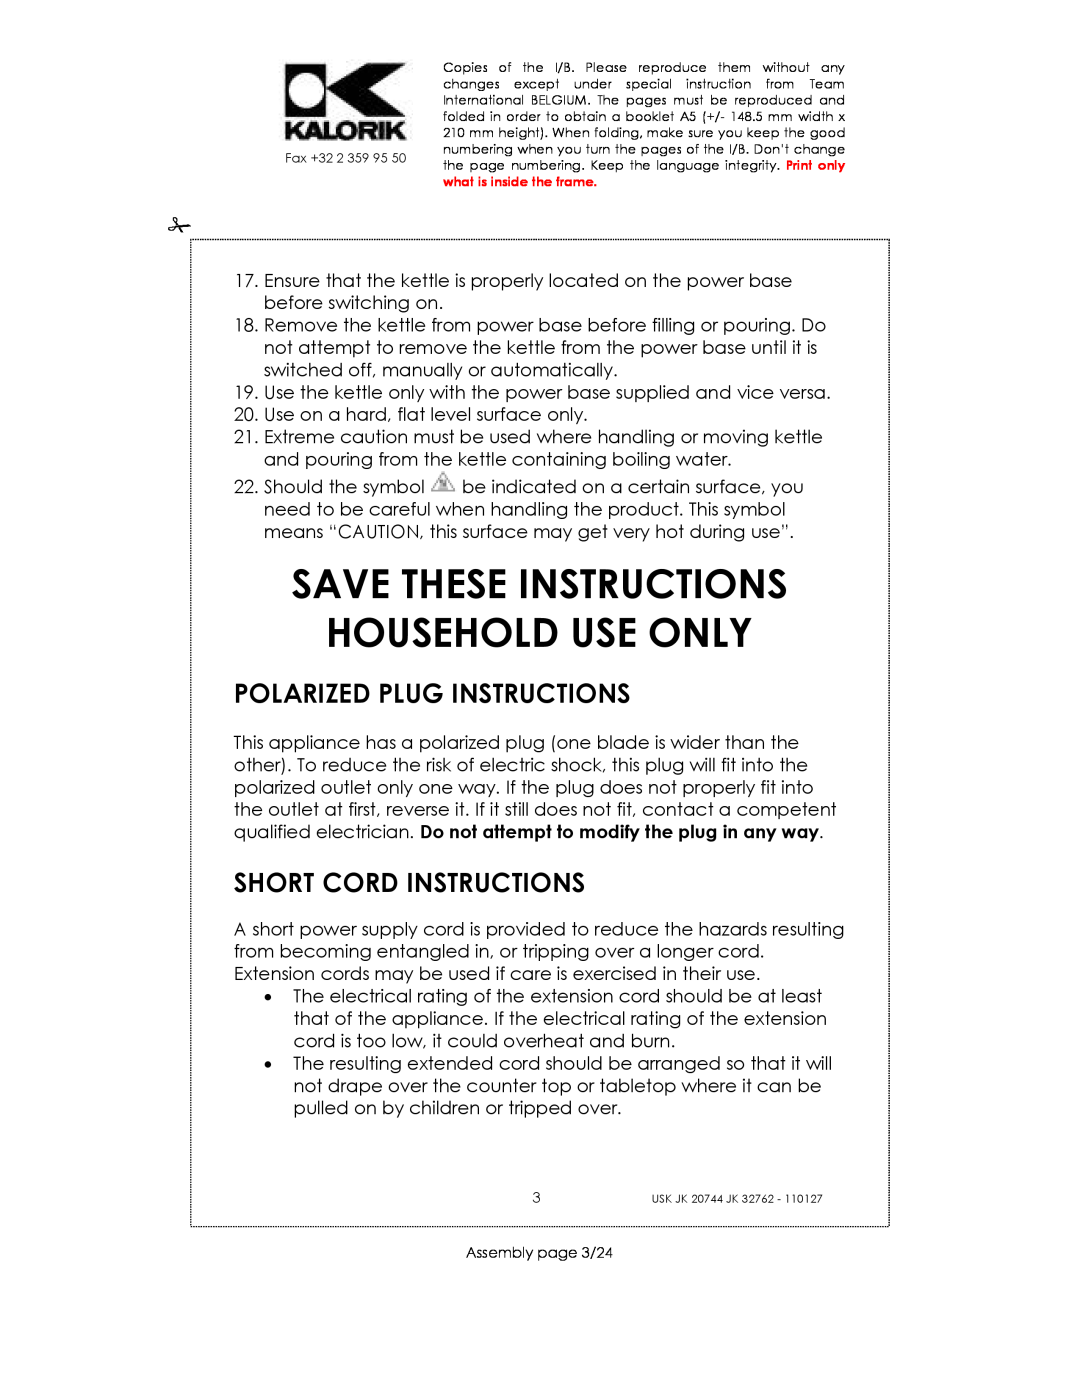 Kalorik USK JK 20744 Save These Instructions Household Use Only, Polarized Plug Instructions, Short Cord Instructions 